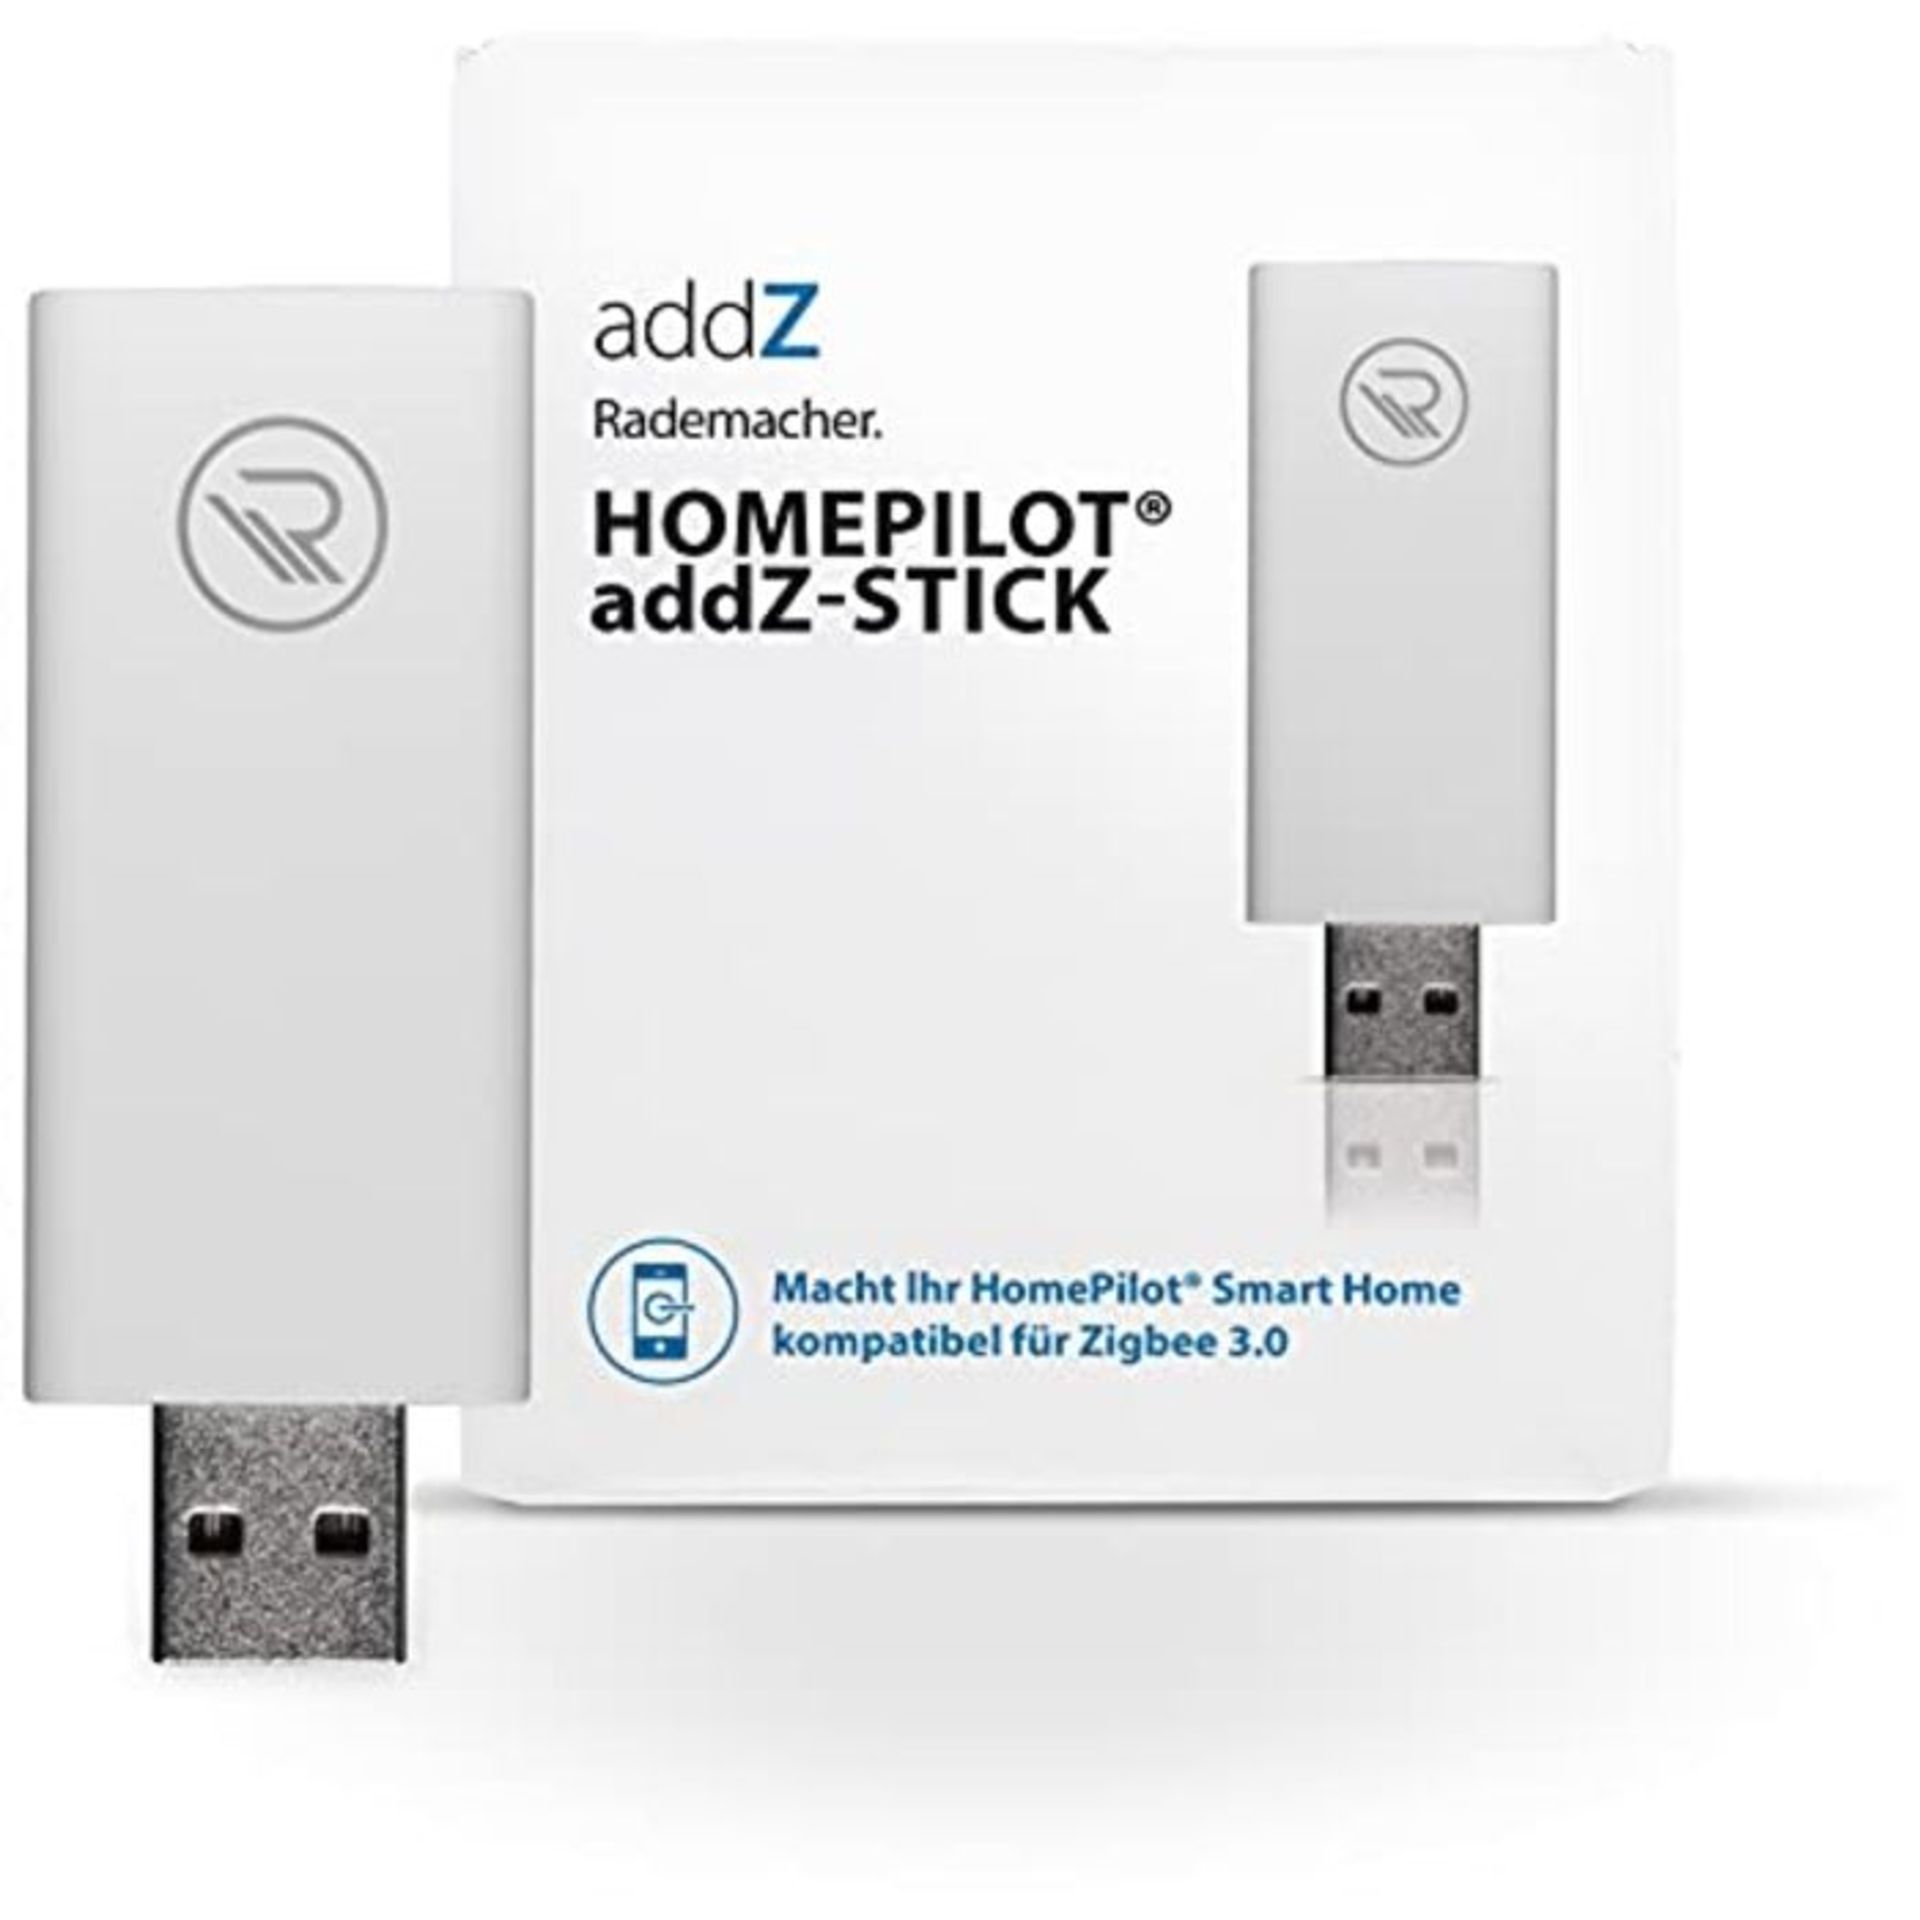 Rademacher HomePilot® AdZ Stick for Integrating Zigbee 3.0 LED Bulbs into Smart Home